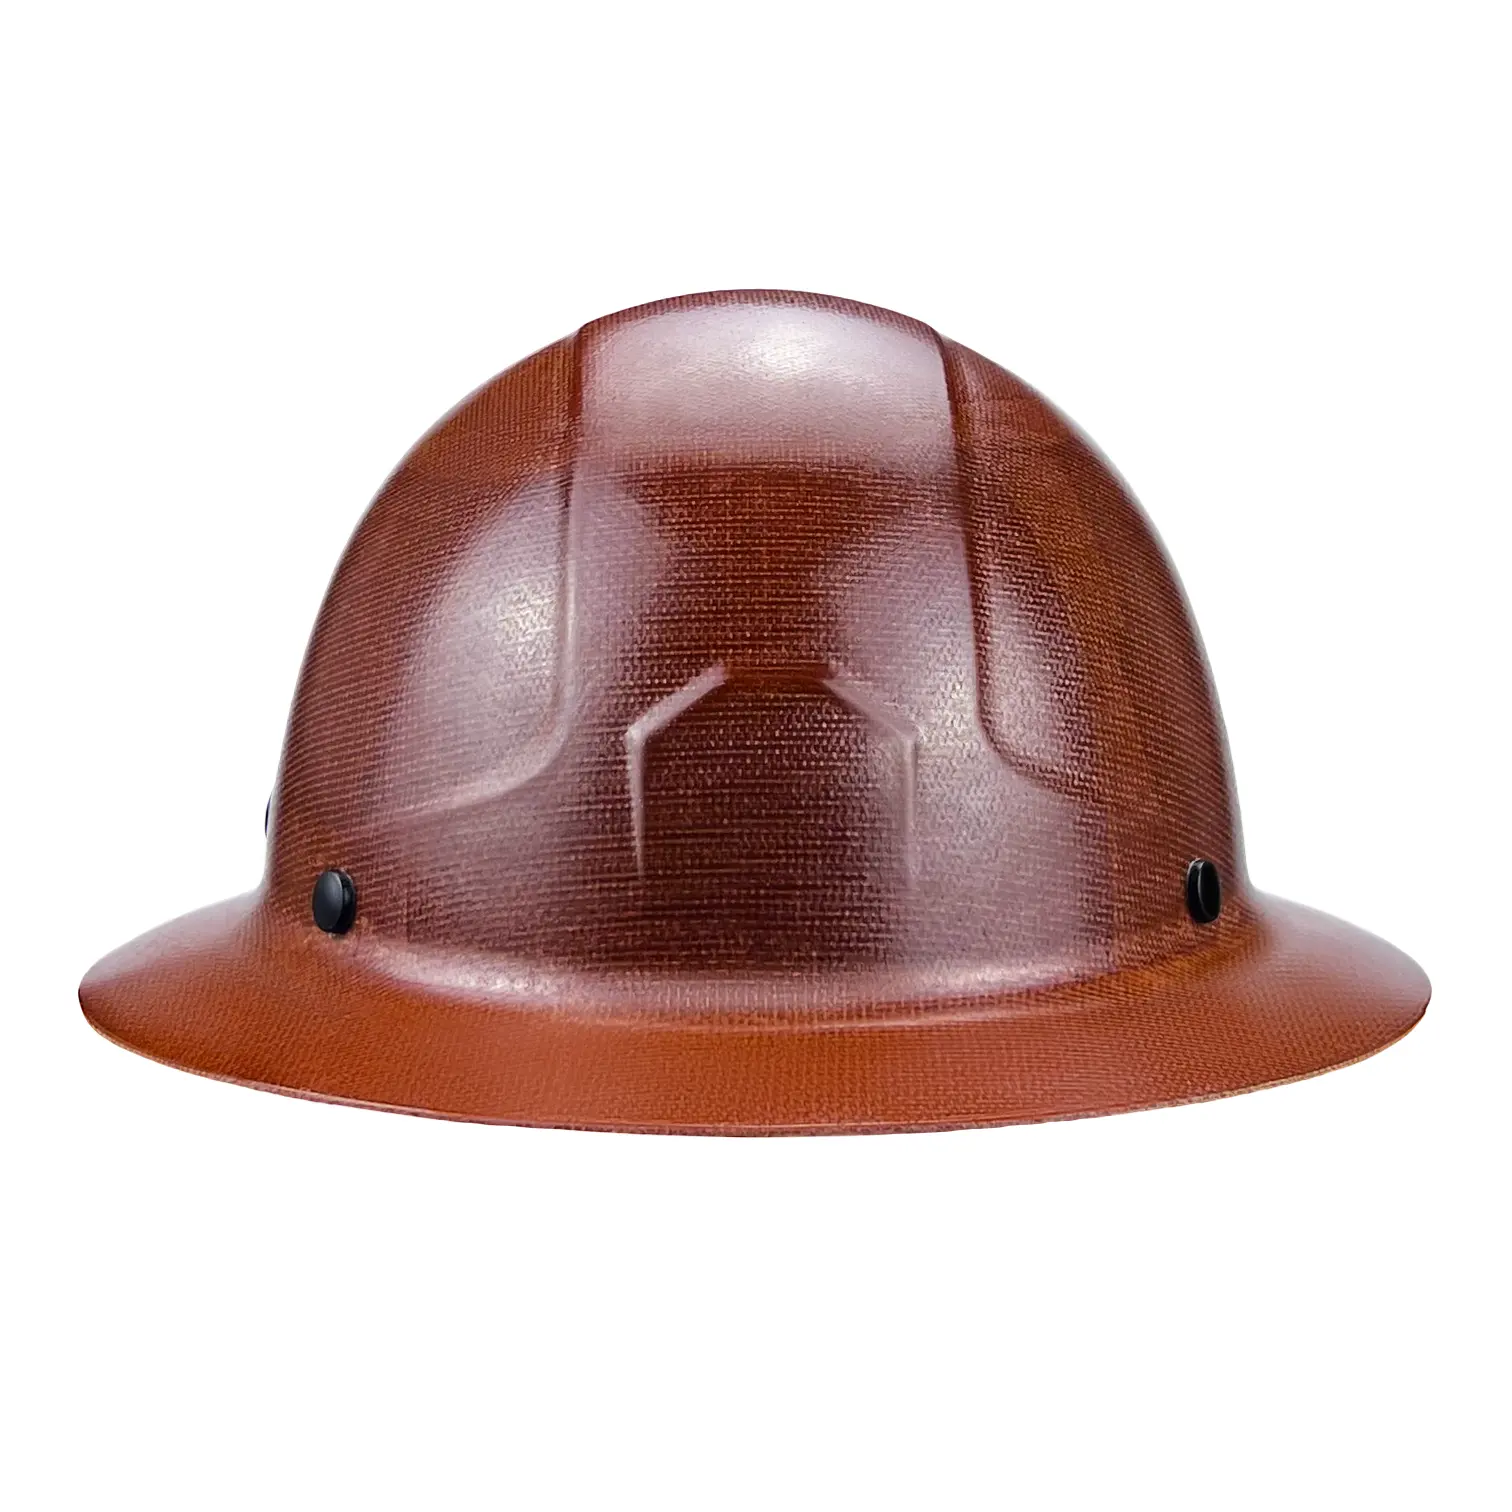 OEM/OEM customized logo full birm Hard hats Lightweight Adjustable fiberglass Safety Helmet